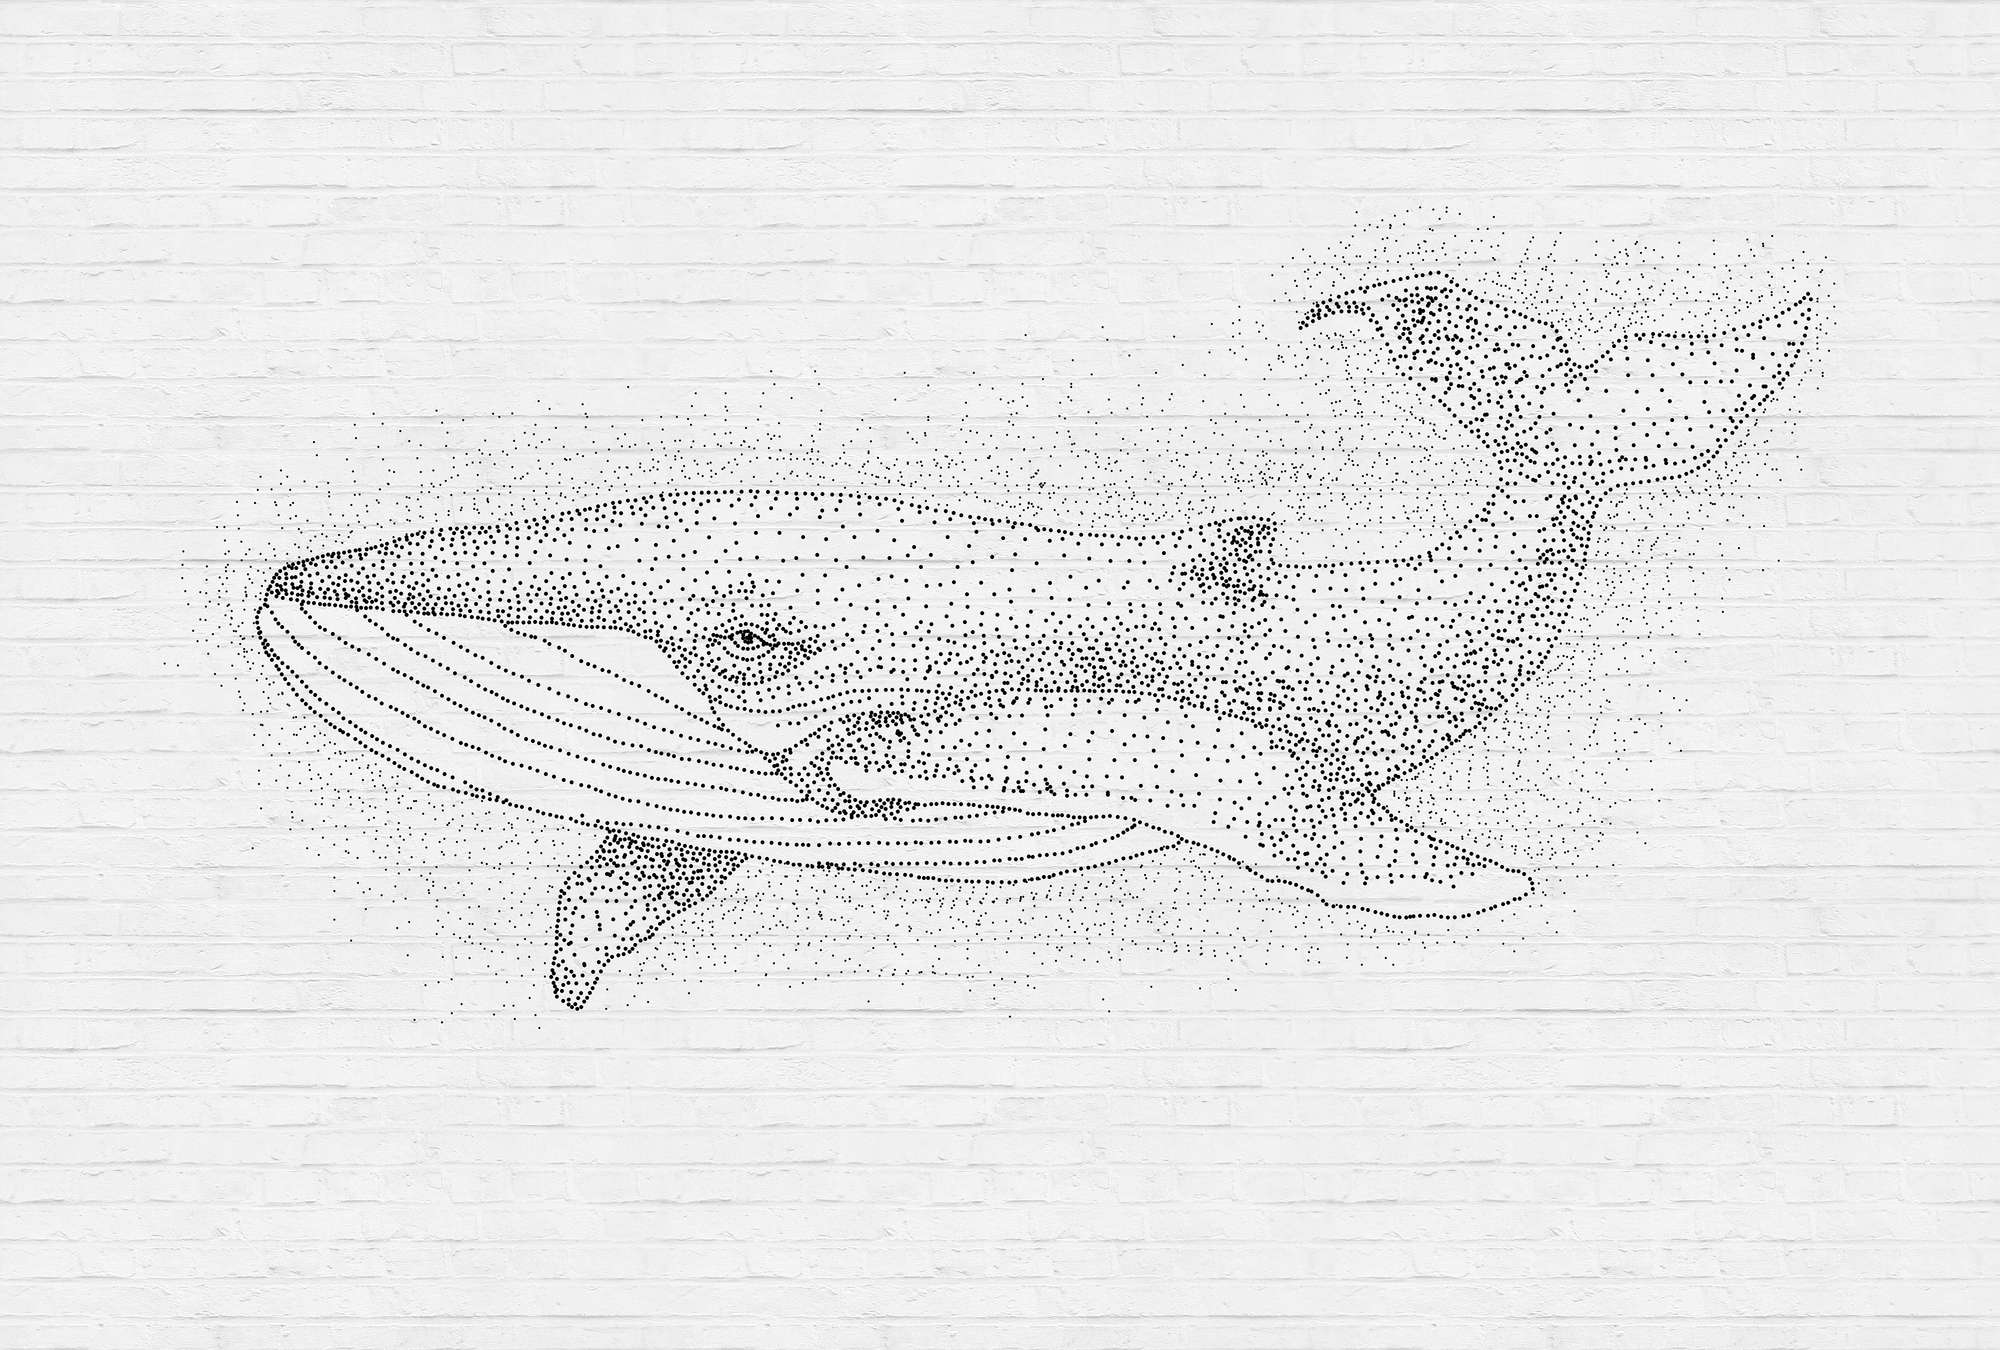             Design mural brick wall & whale motif
        